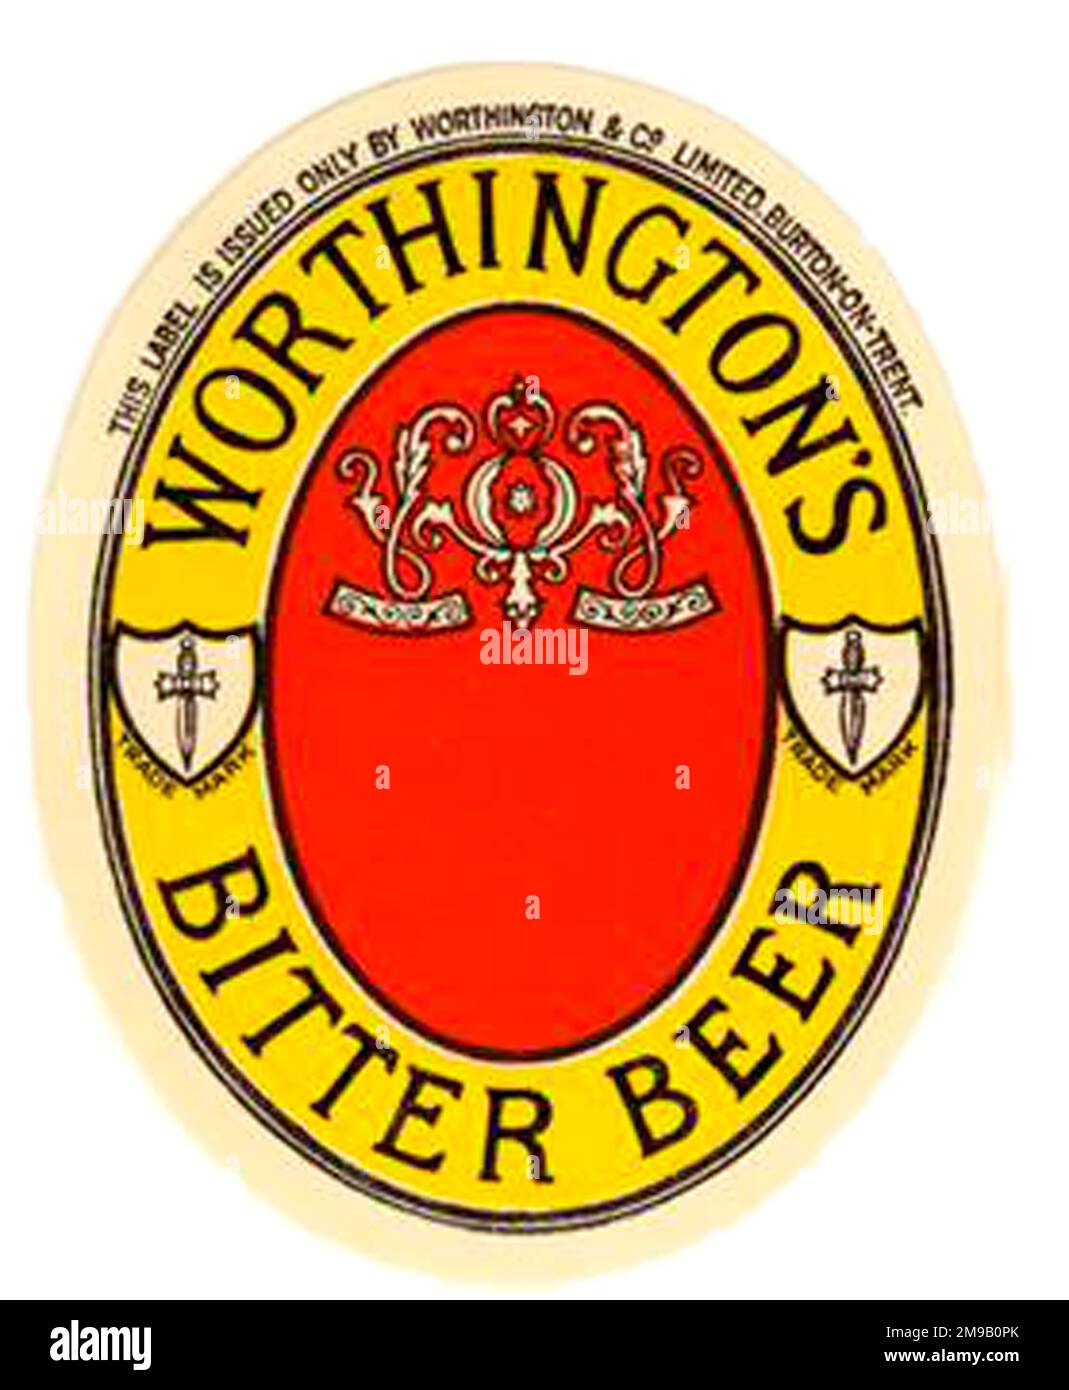 Worthington's Bitter Beer Stock Photo